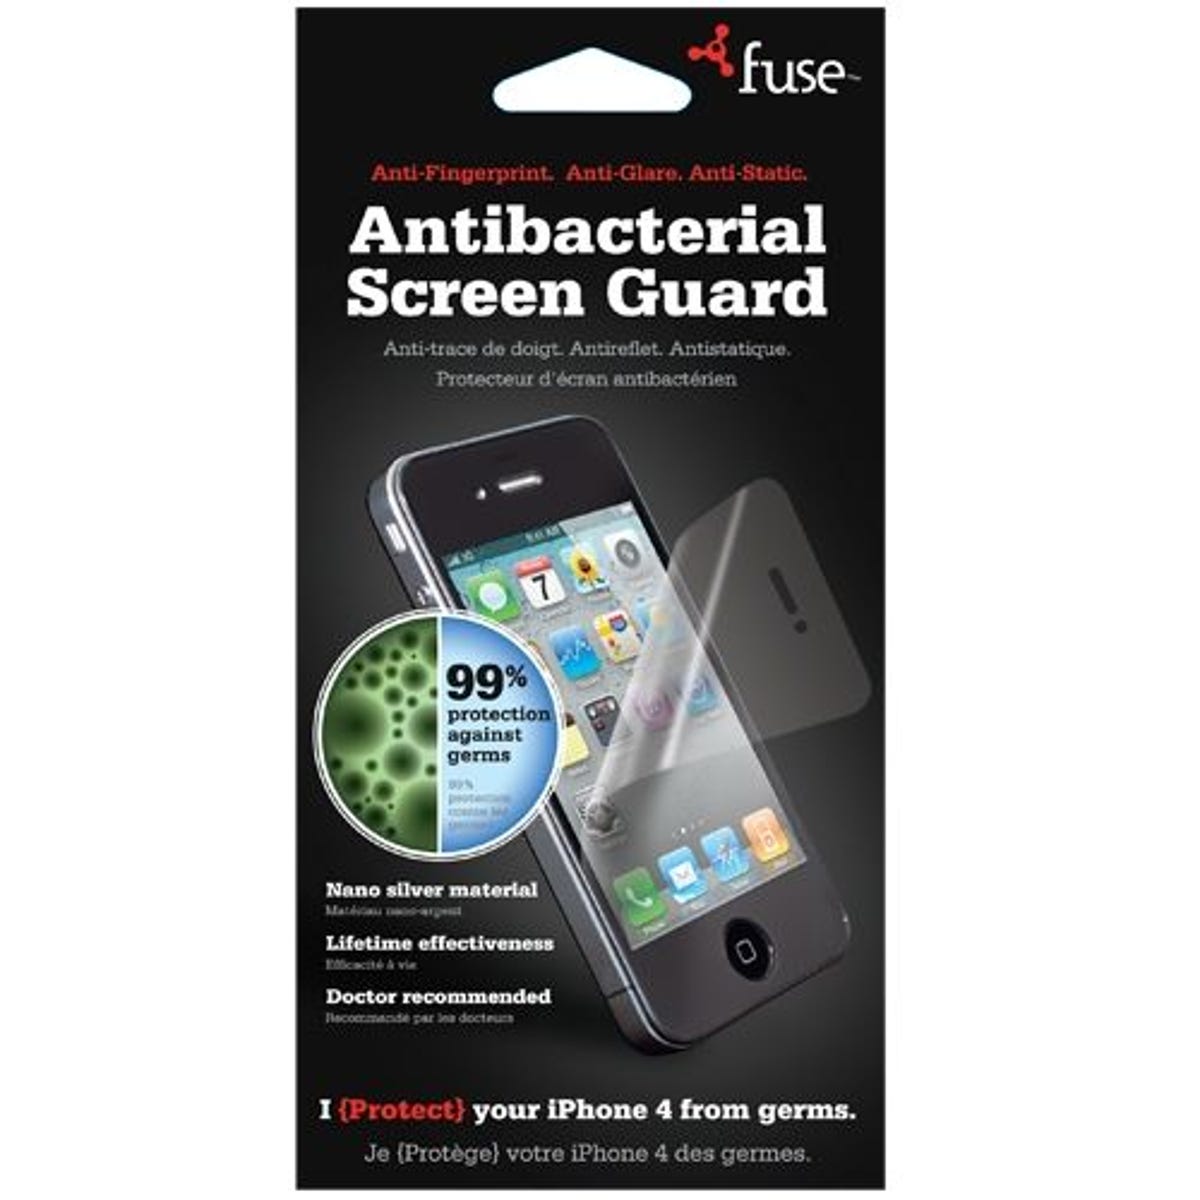 Fuse_Antibacterial_Screen_Guard_1.jpg